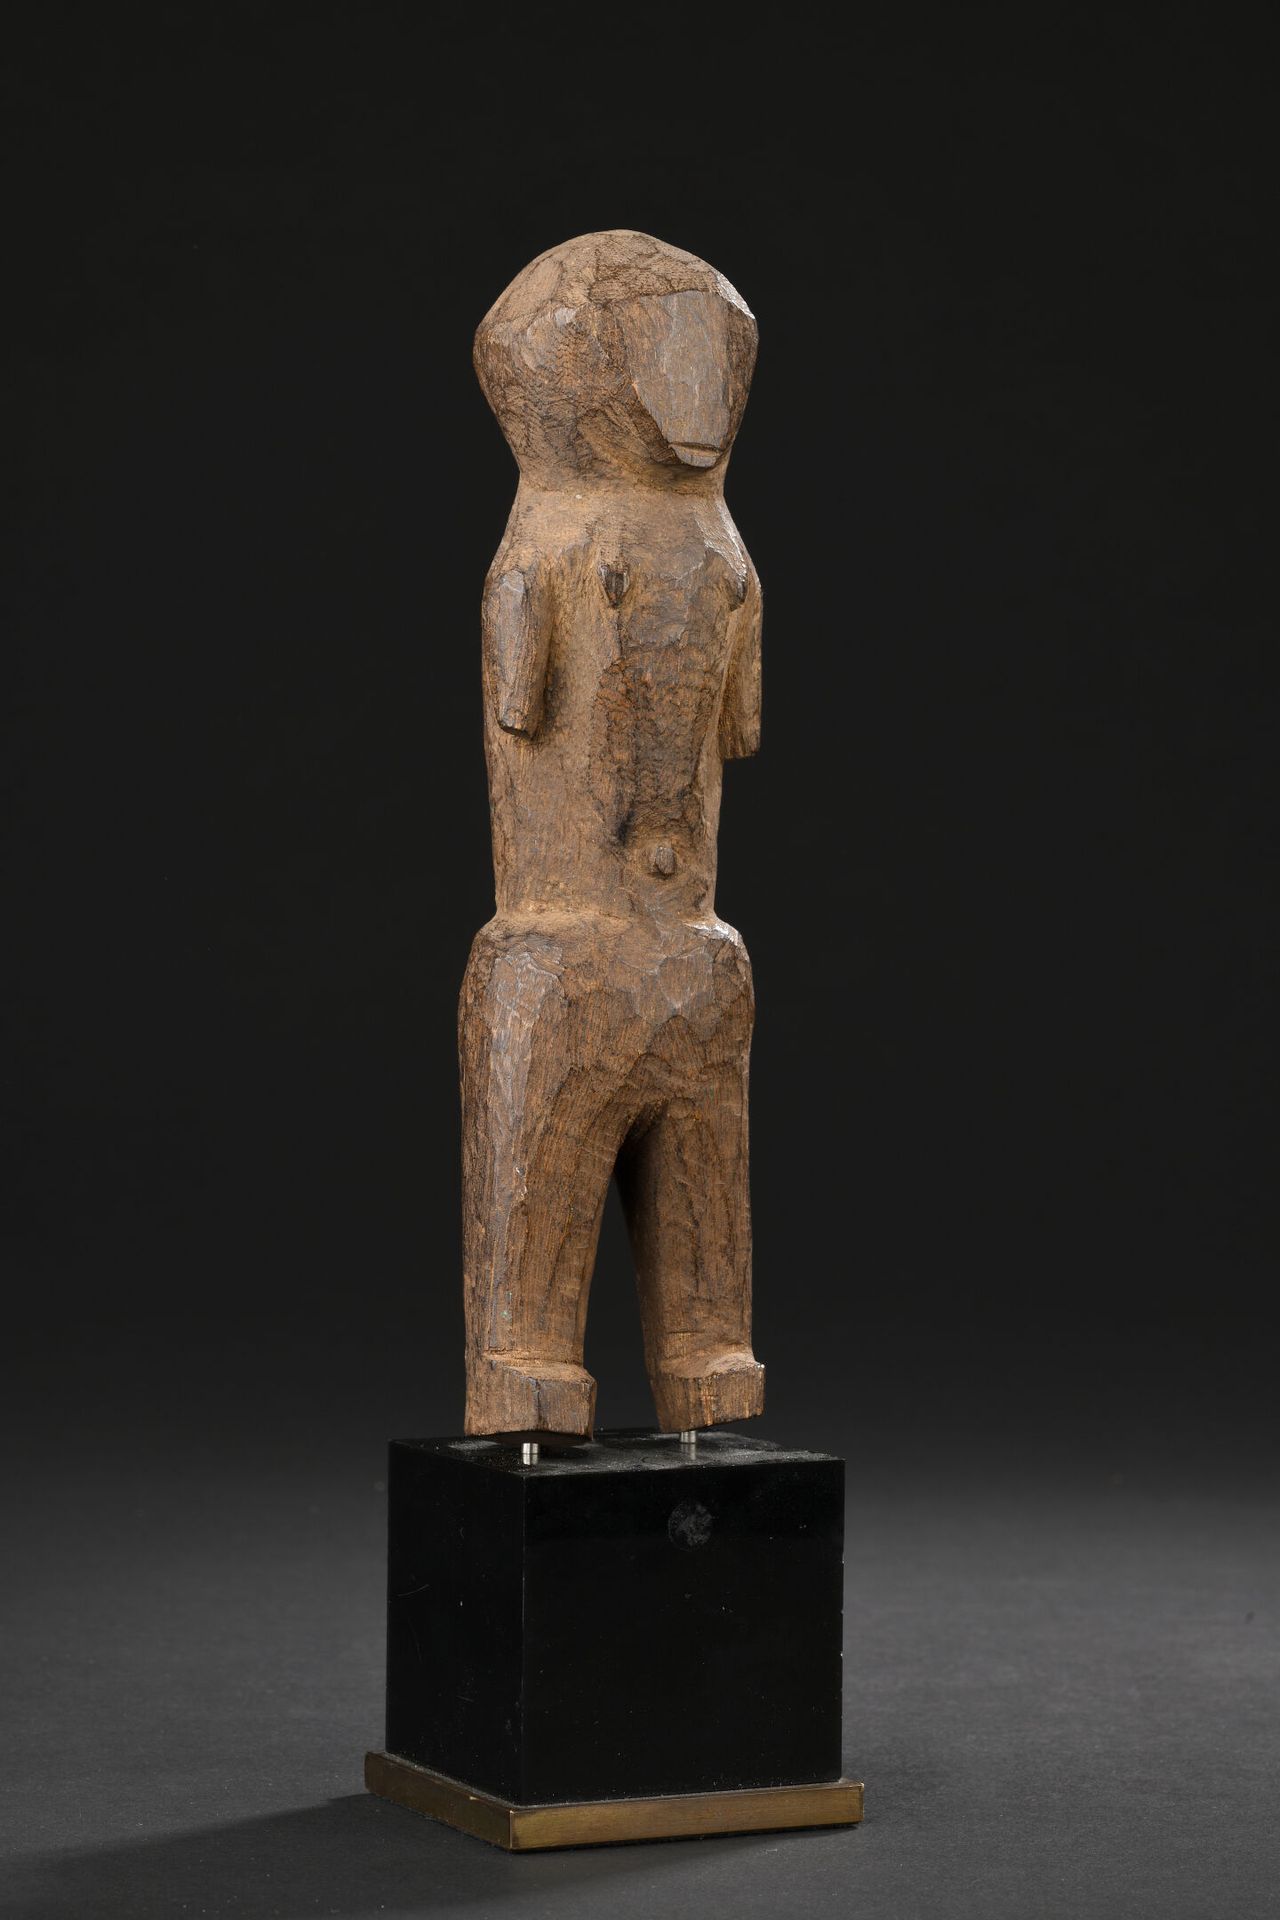 Null *Statuette Ngbaka, Demokratische Republik Kongo.
Holz
H. 19 cm

Provenienz:&hellip;